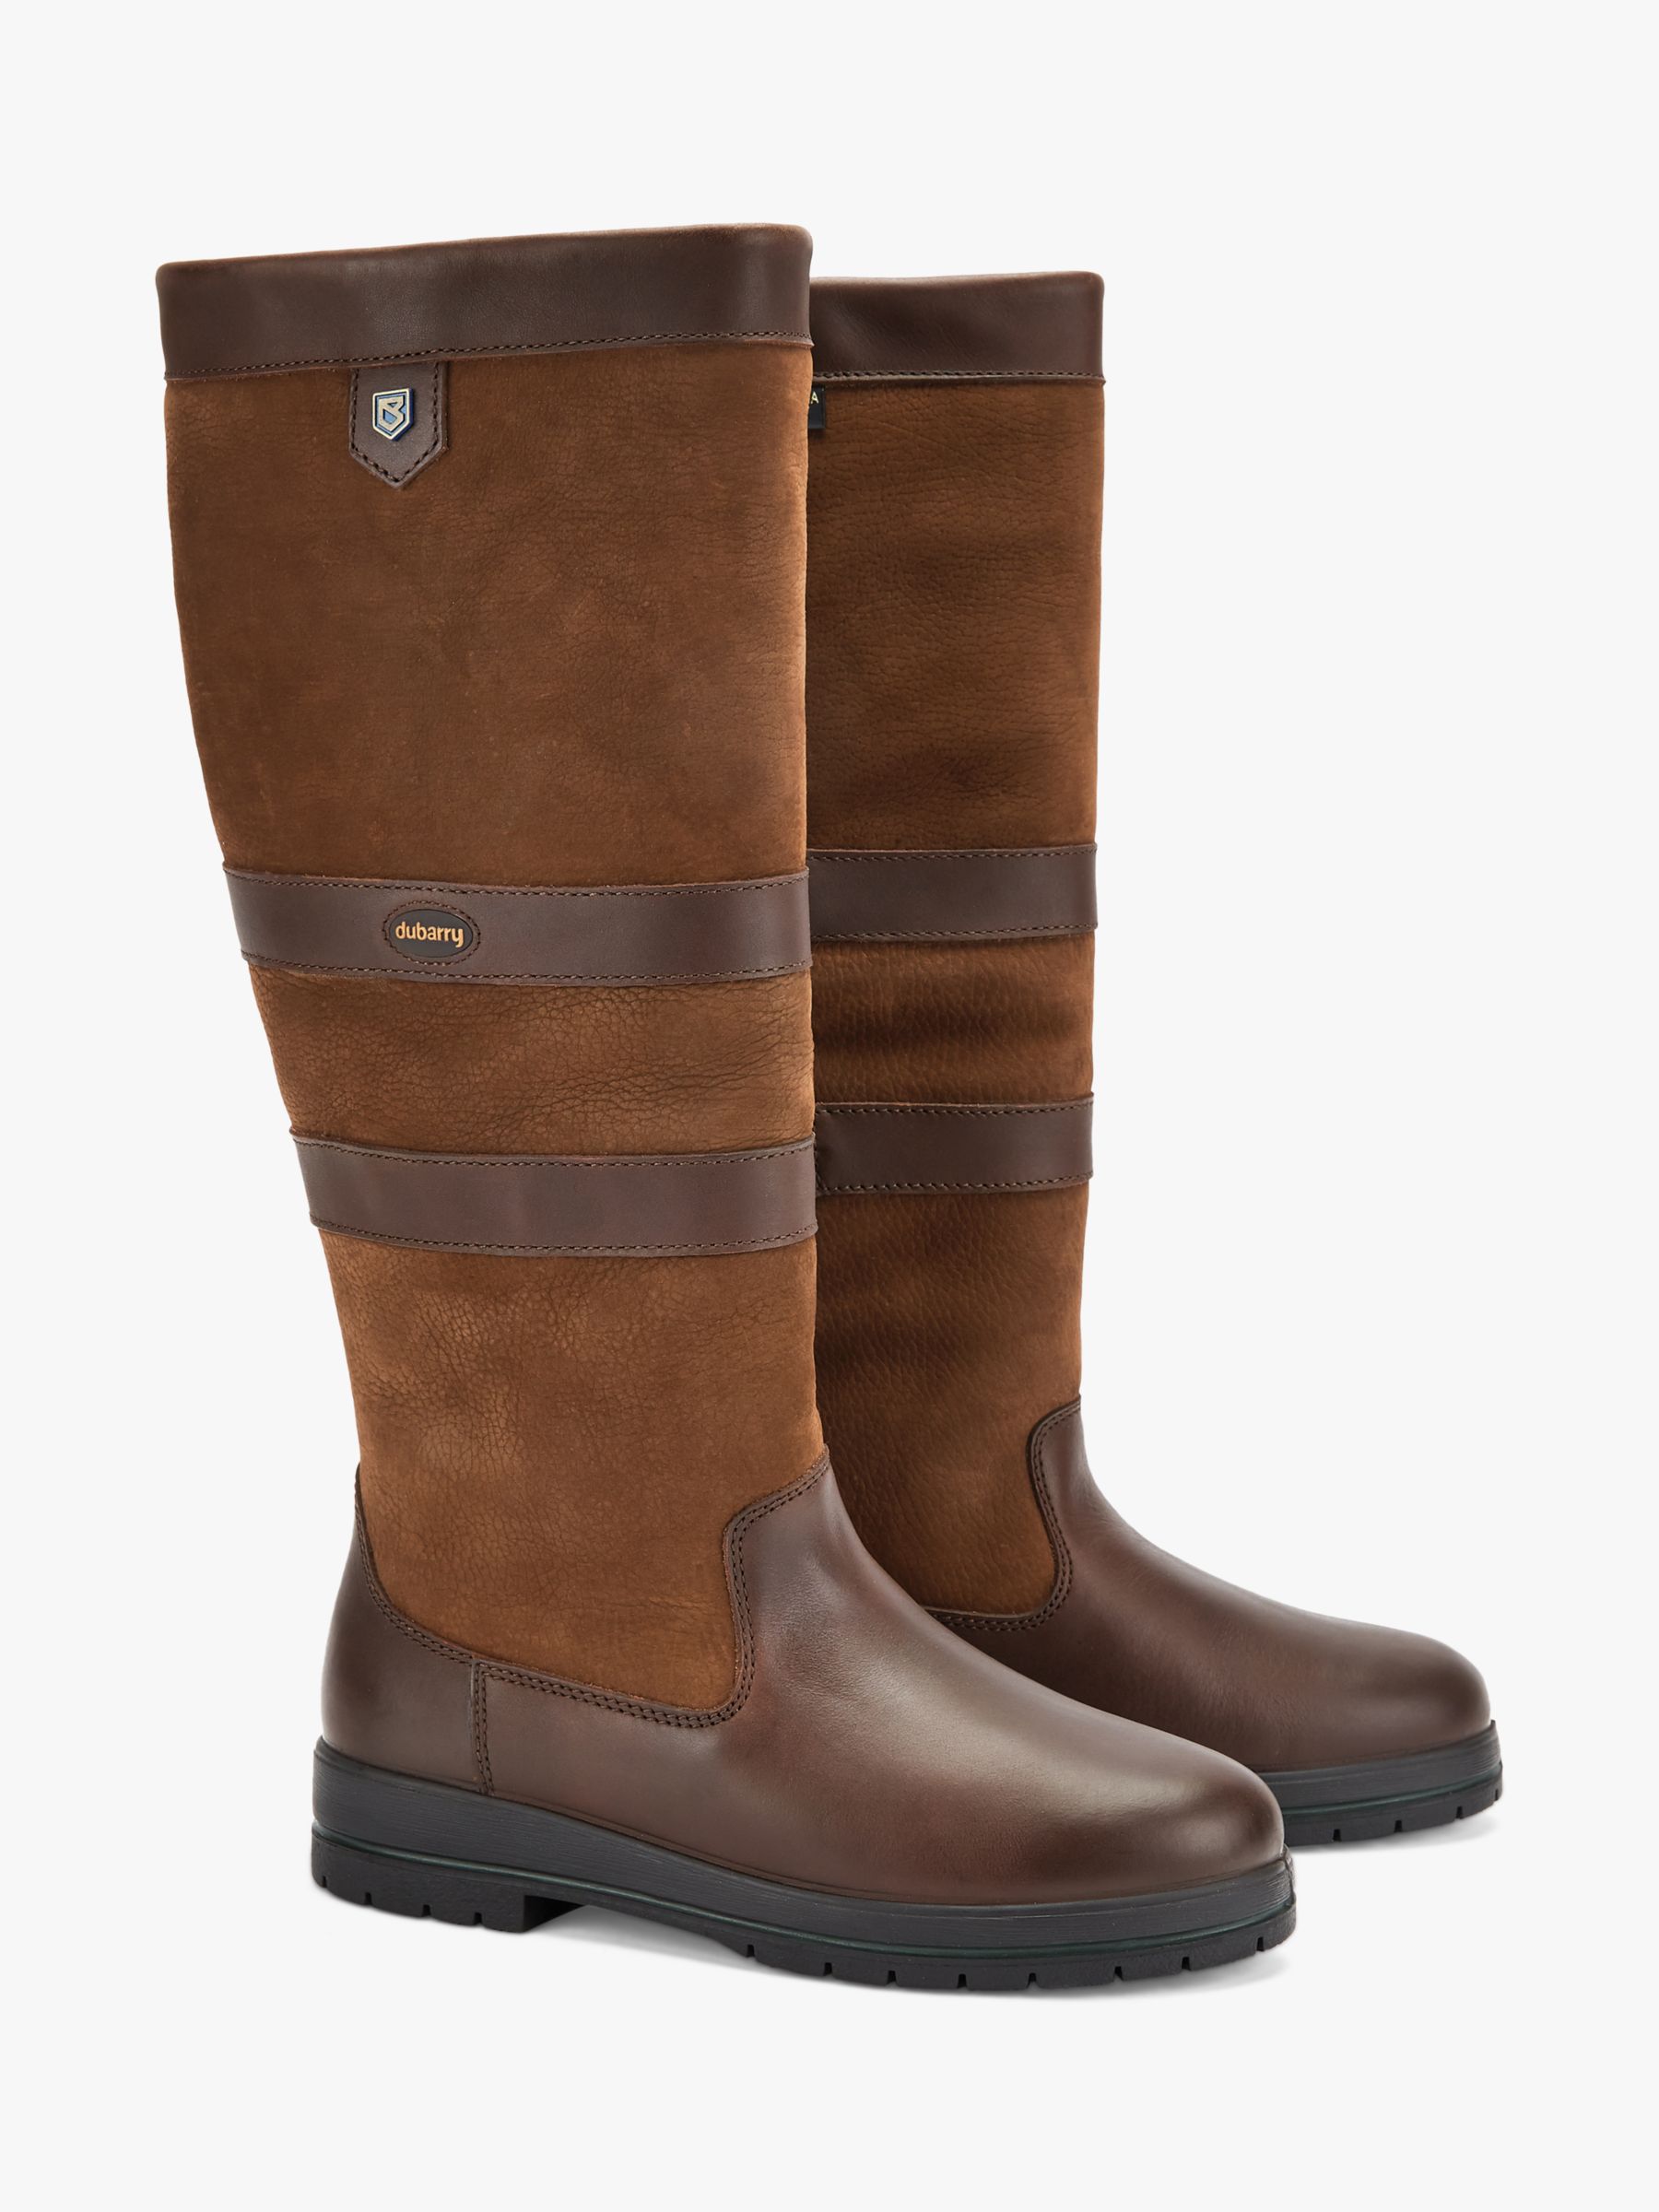 Dubarry Kilternan Waterproof Gore-Tex Knee High Boots, Walnut, 4